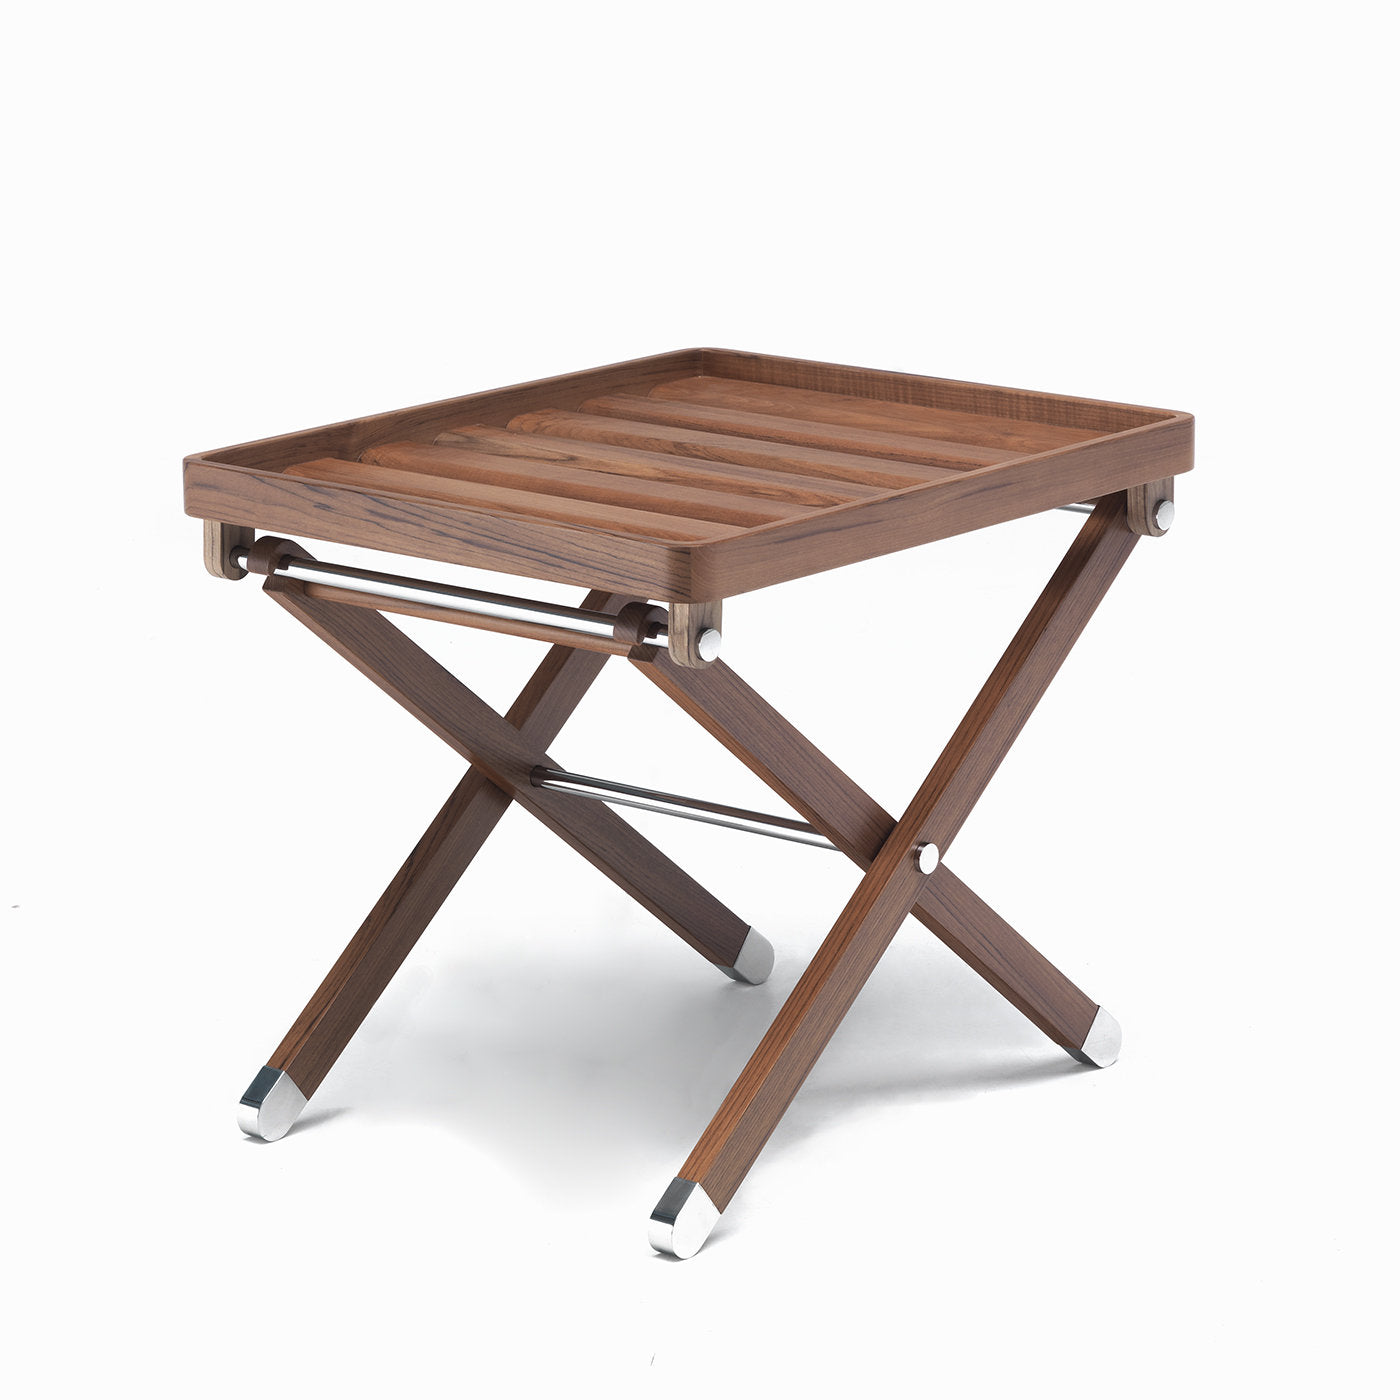 Iroko Folding Table by Simone Ciarmoli and Miguel Queda - Alternative view 1